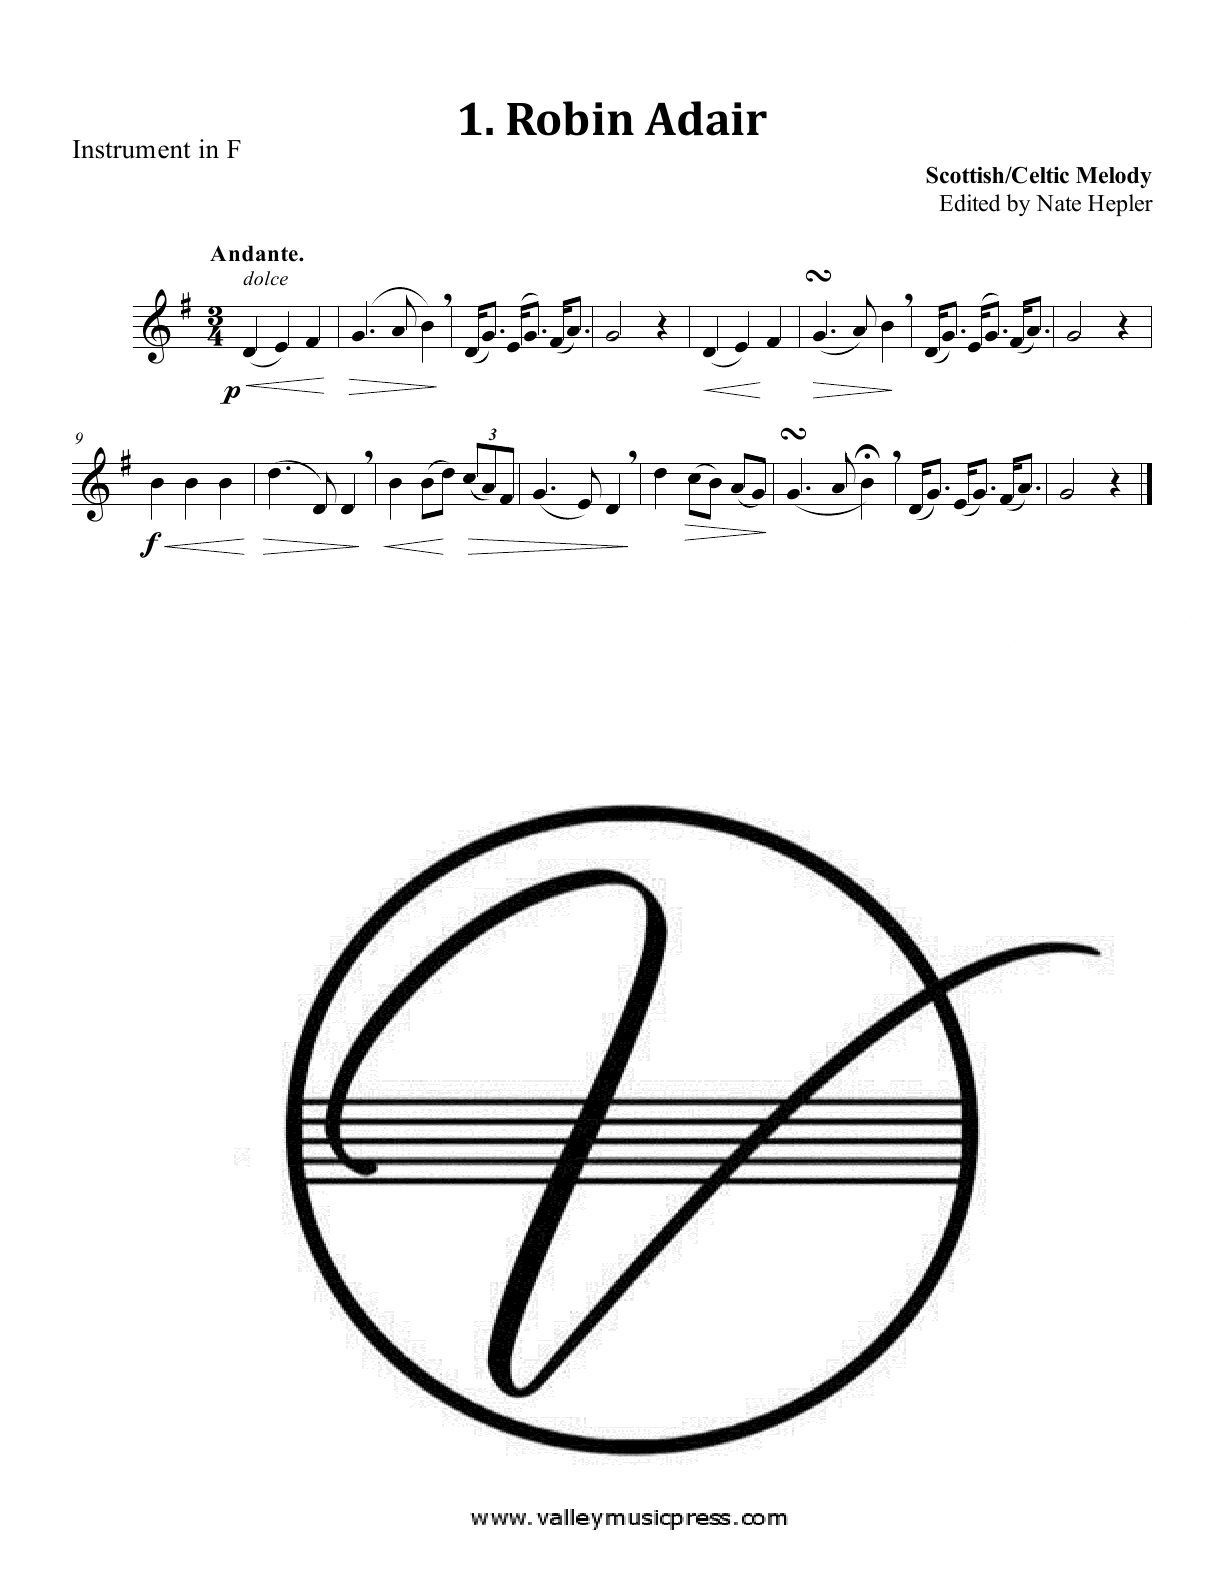 Arban Art of Phrasing Piano Accompaniment Vol. 3 No. 51-75 (Hrn)